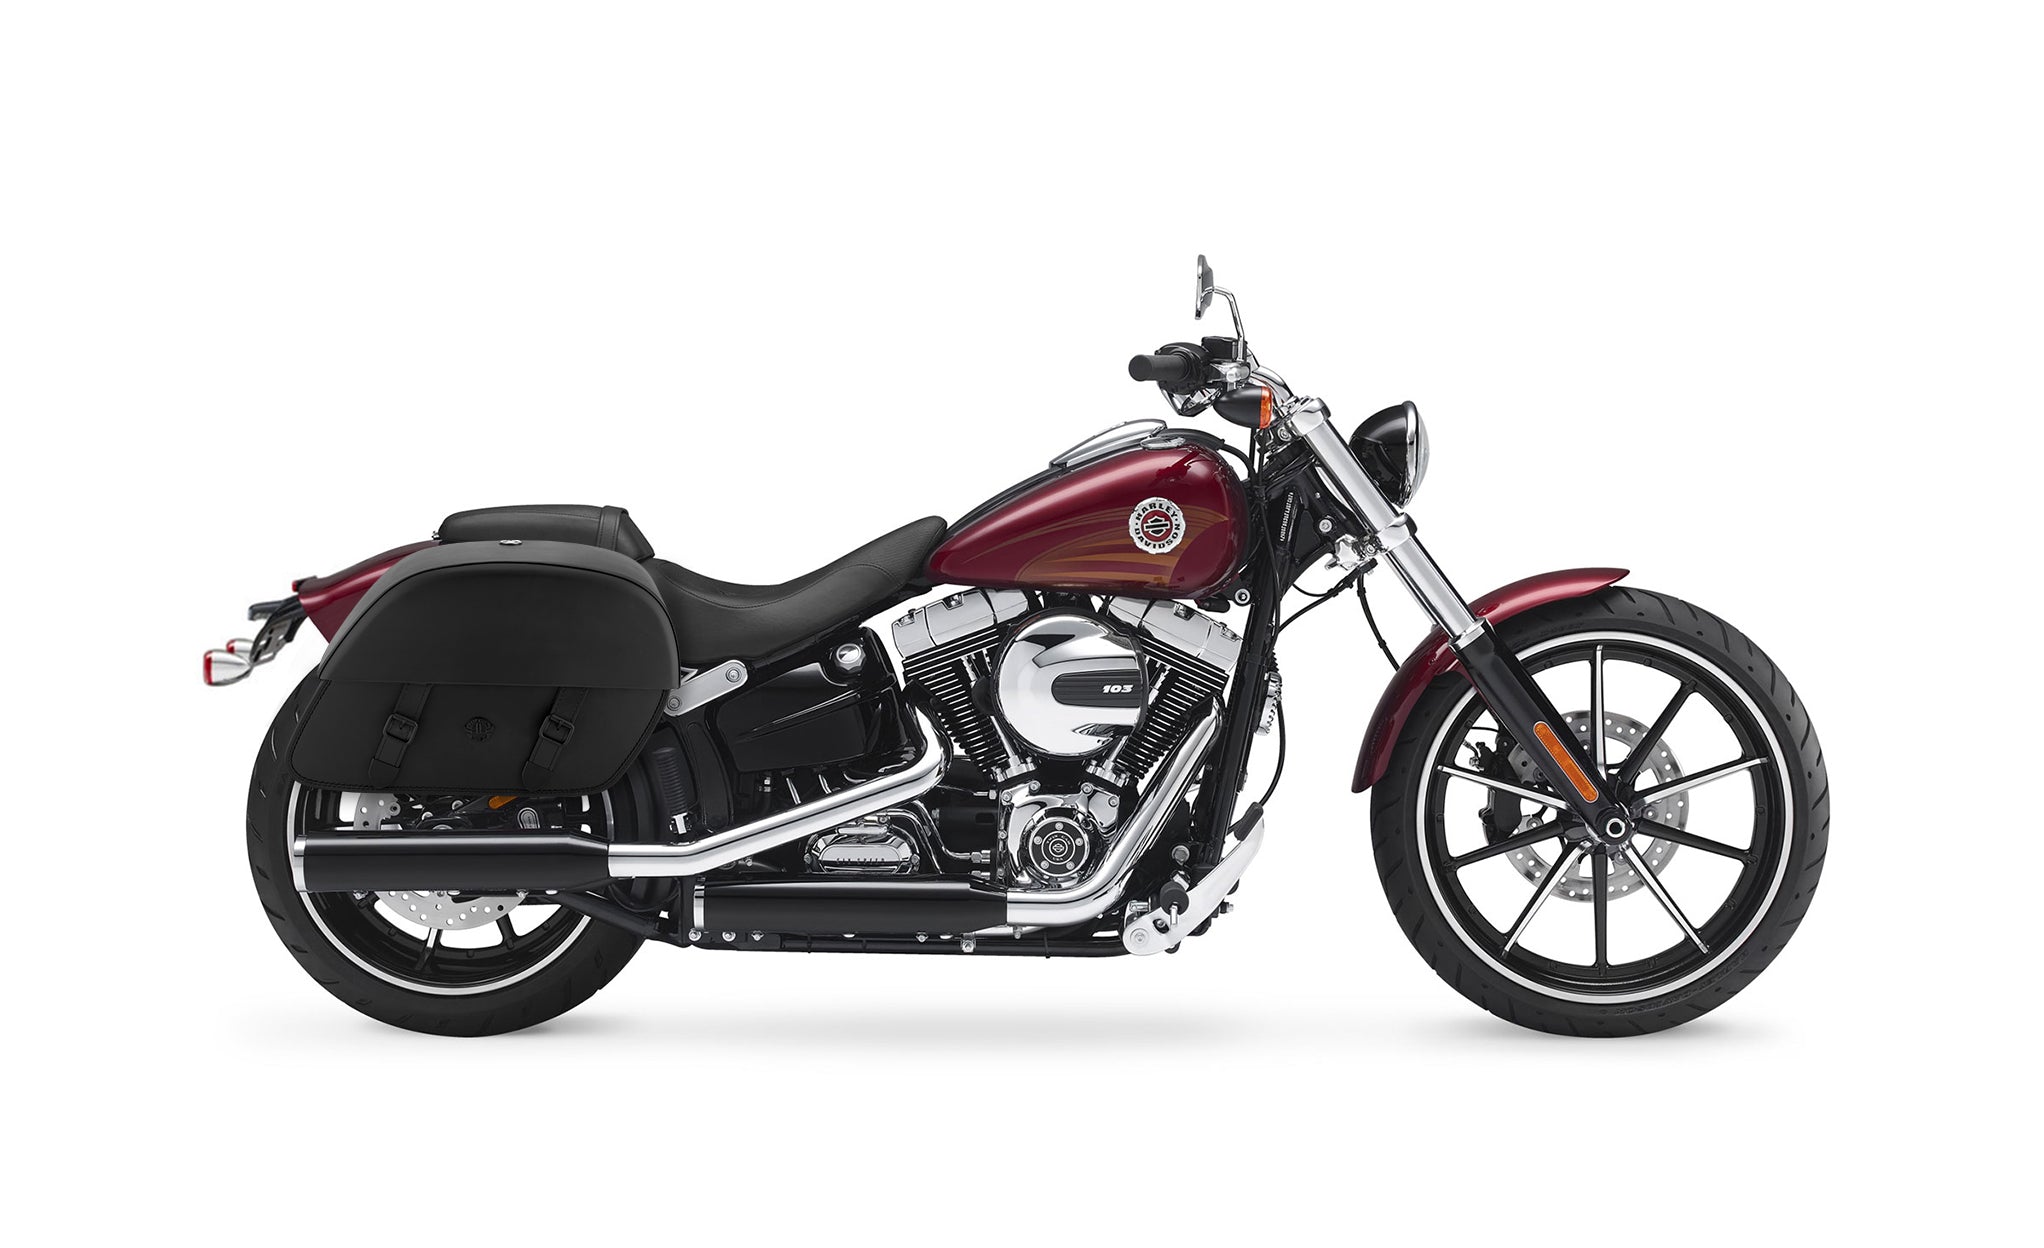 Viking Baelor Large Leather Motorcycle Saddlebags For Harley Davidson Softail Breakout Fxsb on Bike Photo @expand